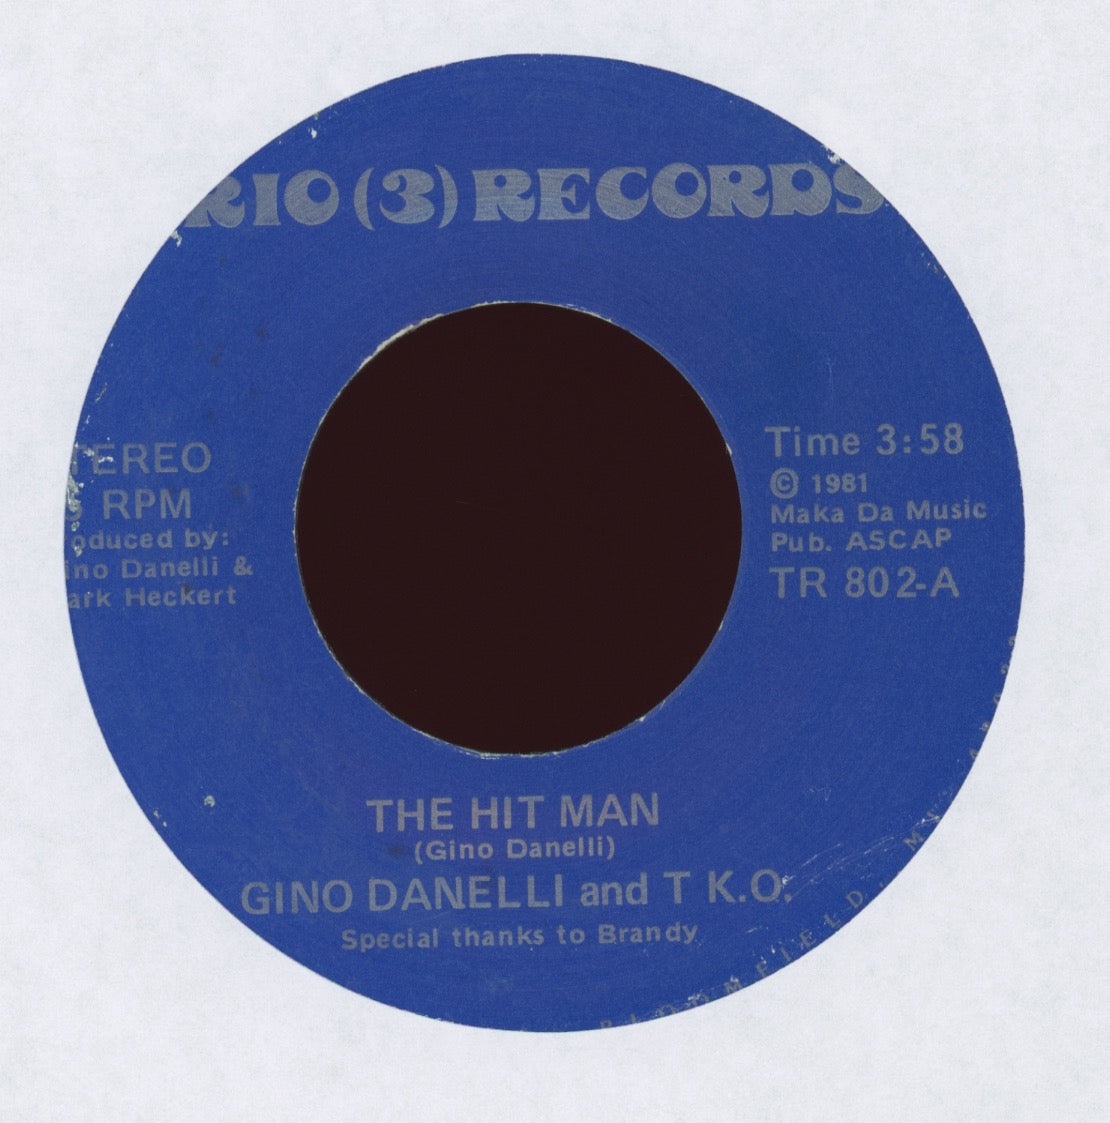 Gino Danelli & T.K.O. - The Hit Man on Trio 3